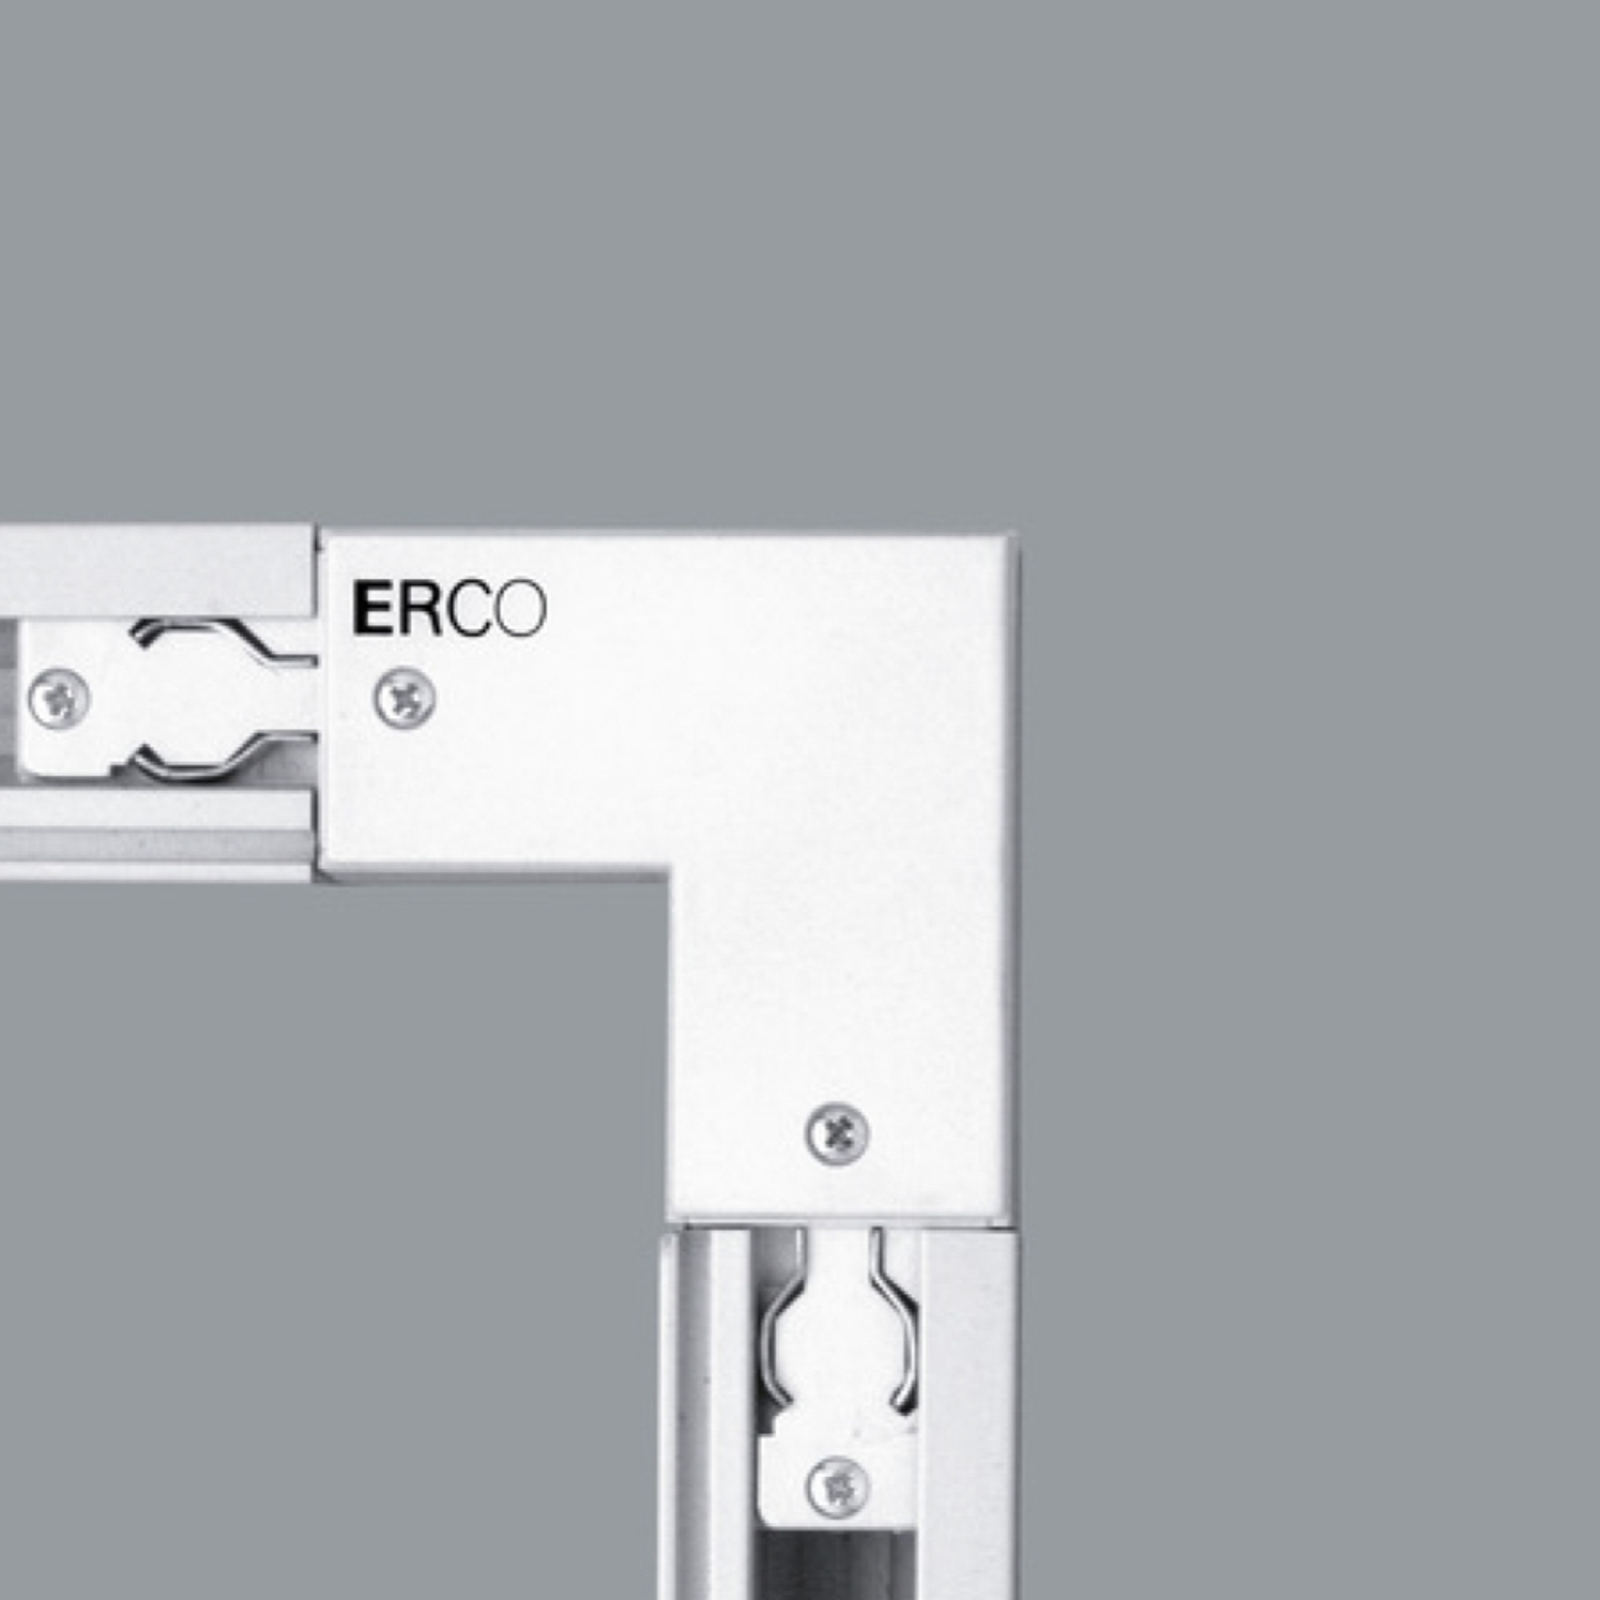 ERCO 3-fase-hoekverbinder aardedraad binnen, wit